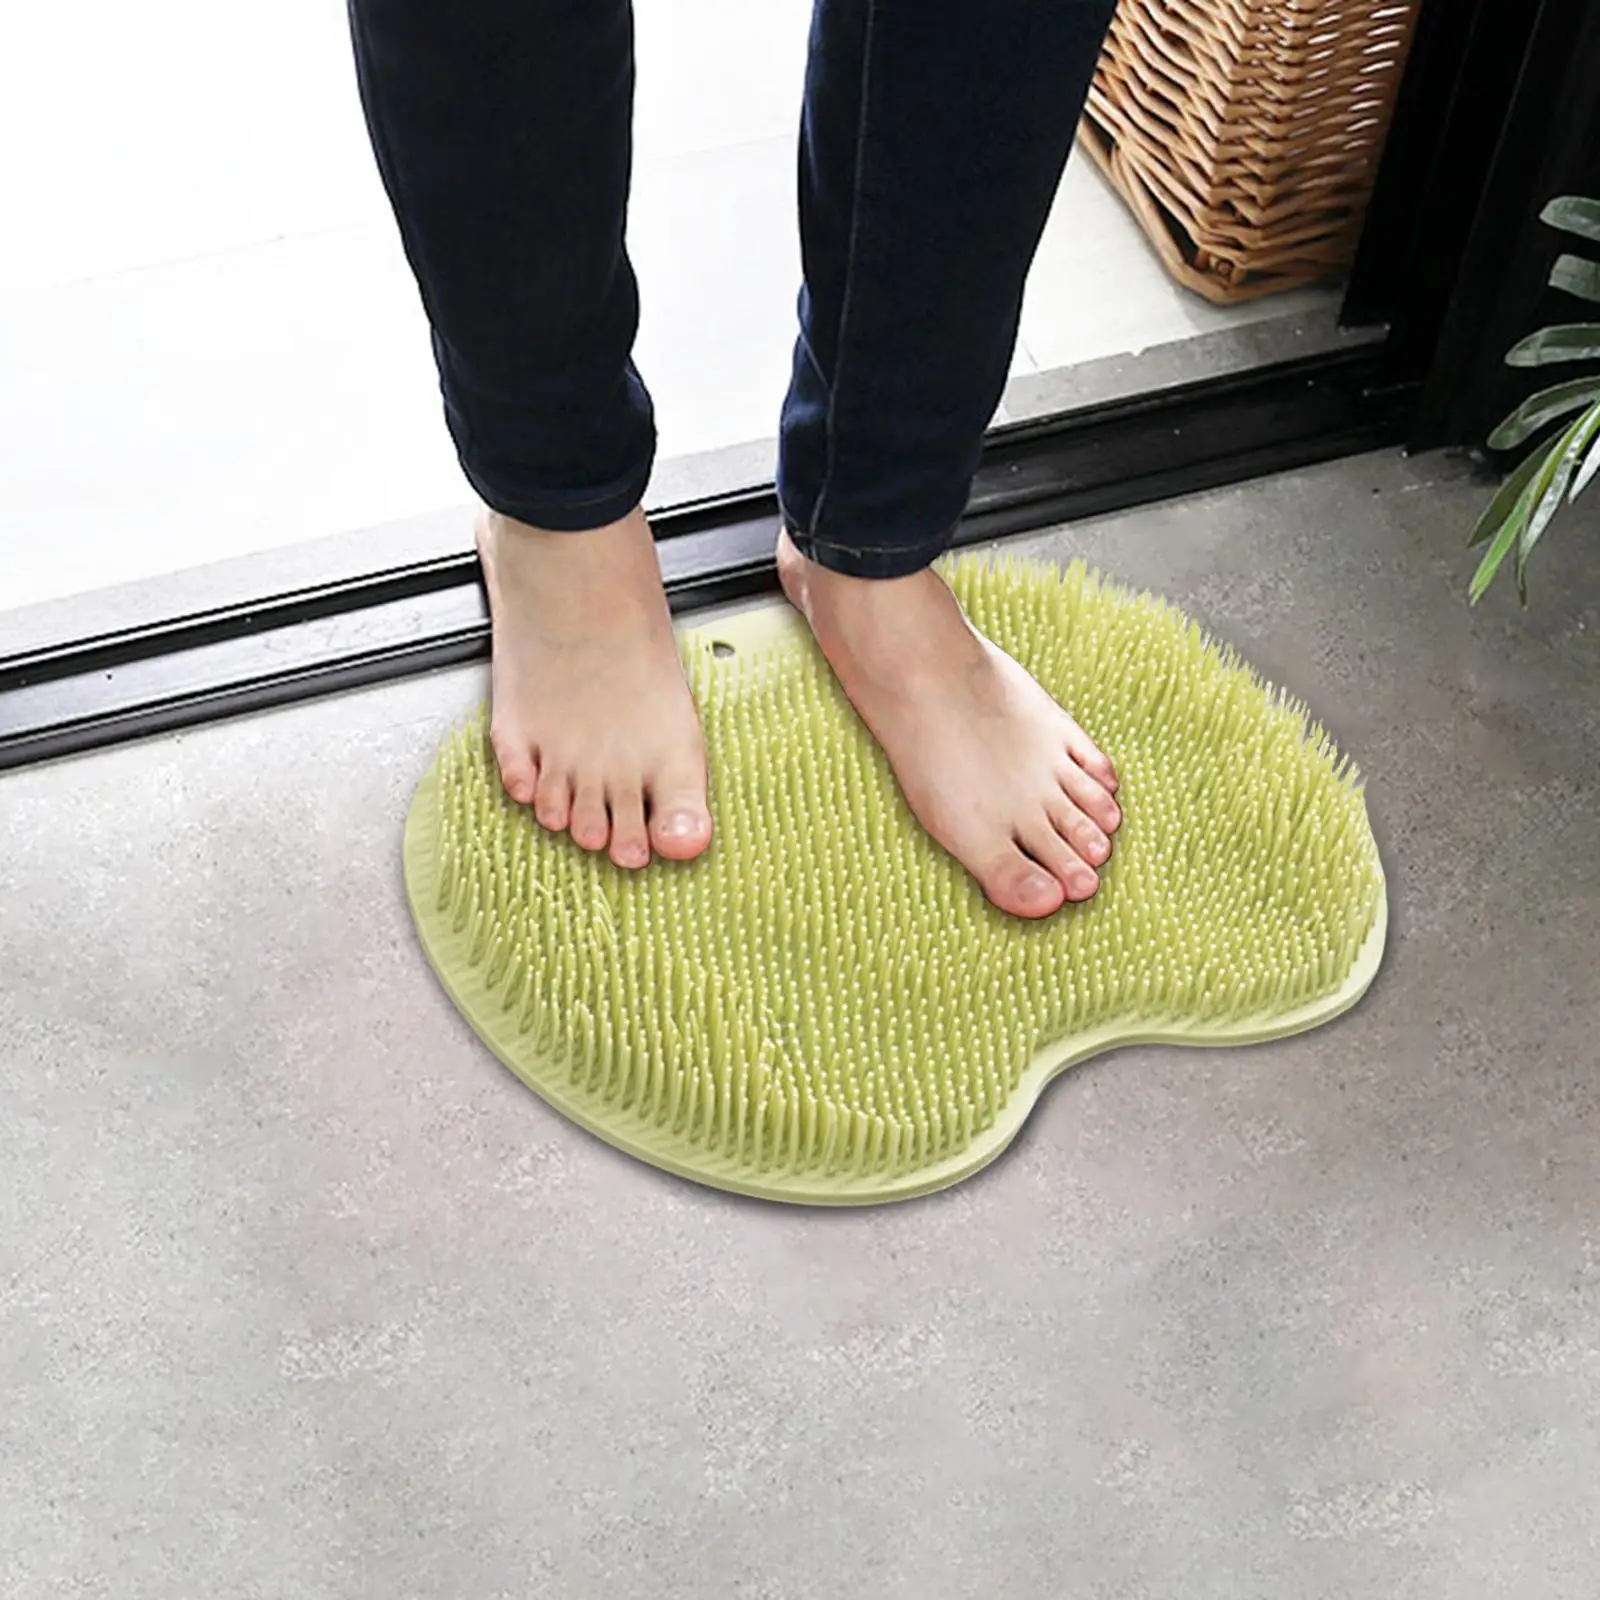 Multipurpose Shower Foot Scrubber Mat Foot Cleaner Durable Foot Tub Bath Mat for Feet Clean Bathroom Accessories Home SPA